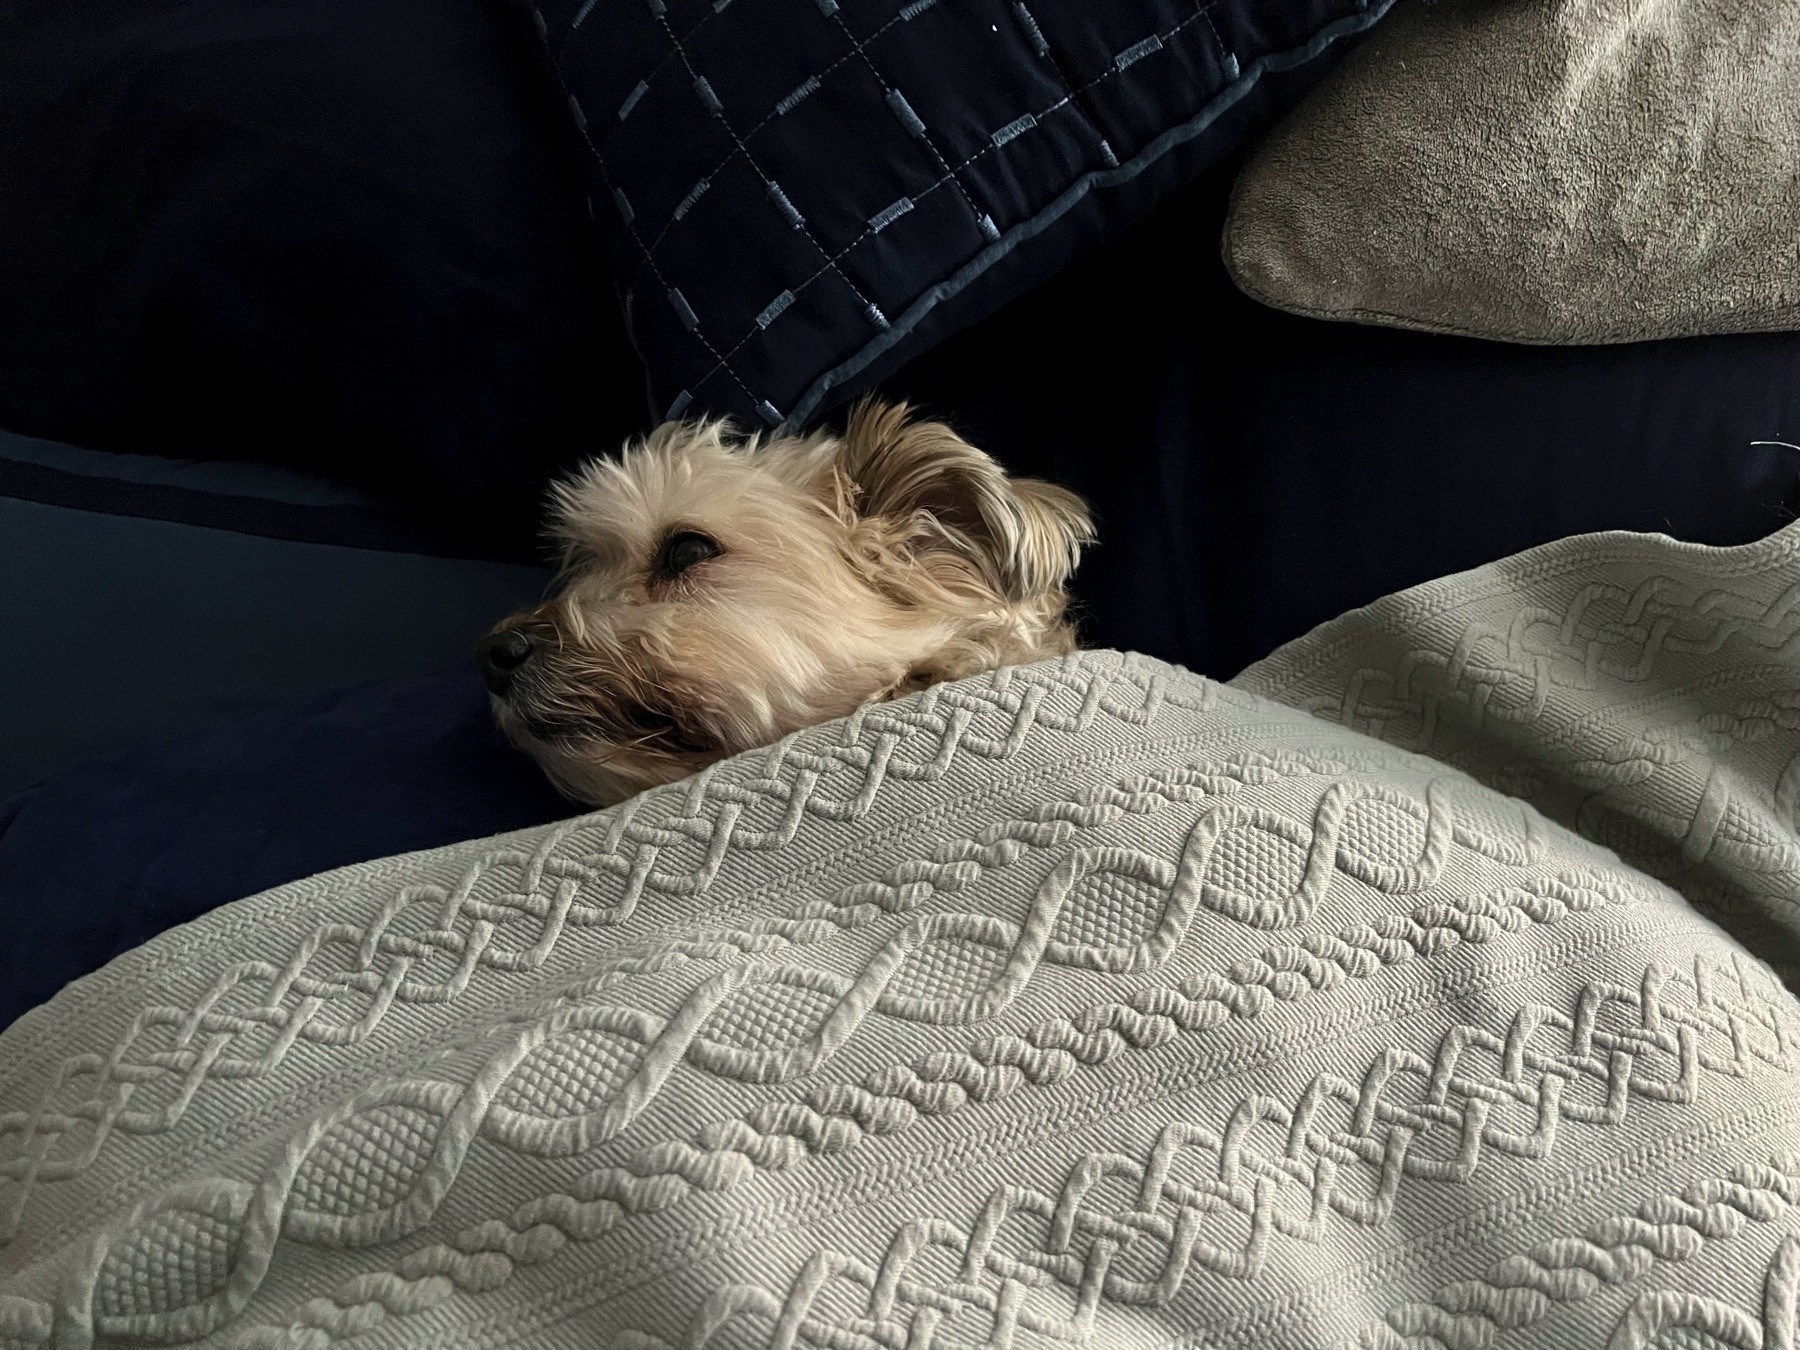 Dog with white fur, half asleep, tucked under a grey knit blanket.